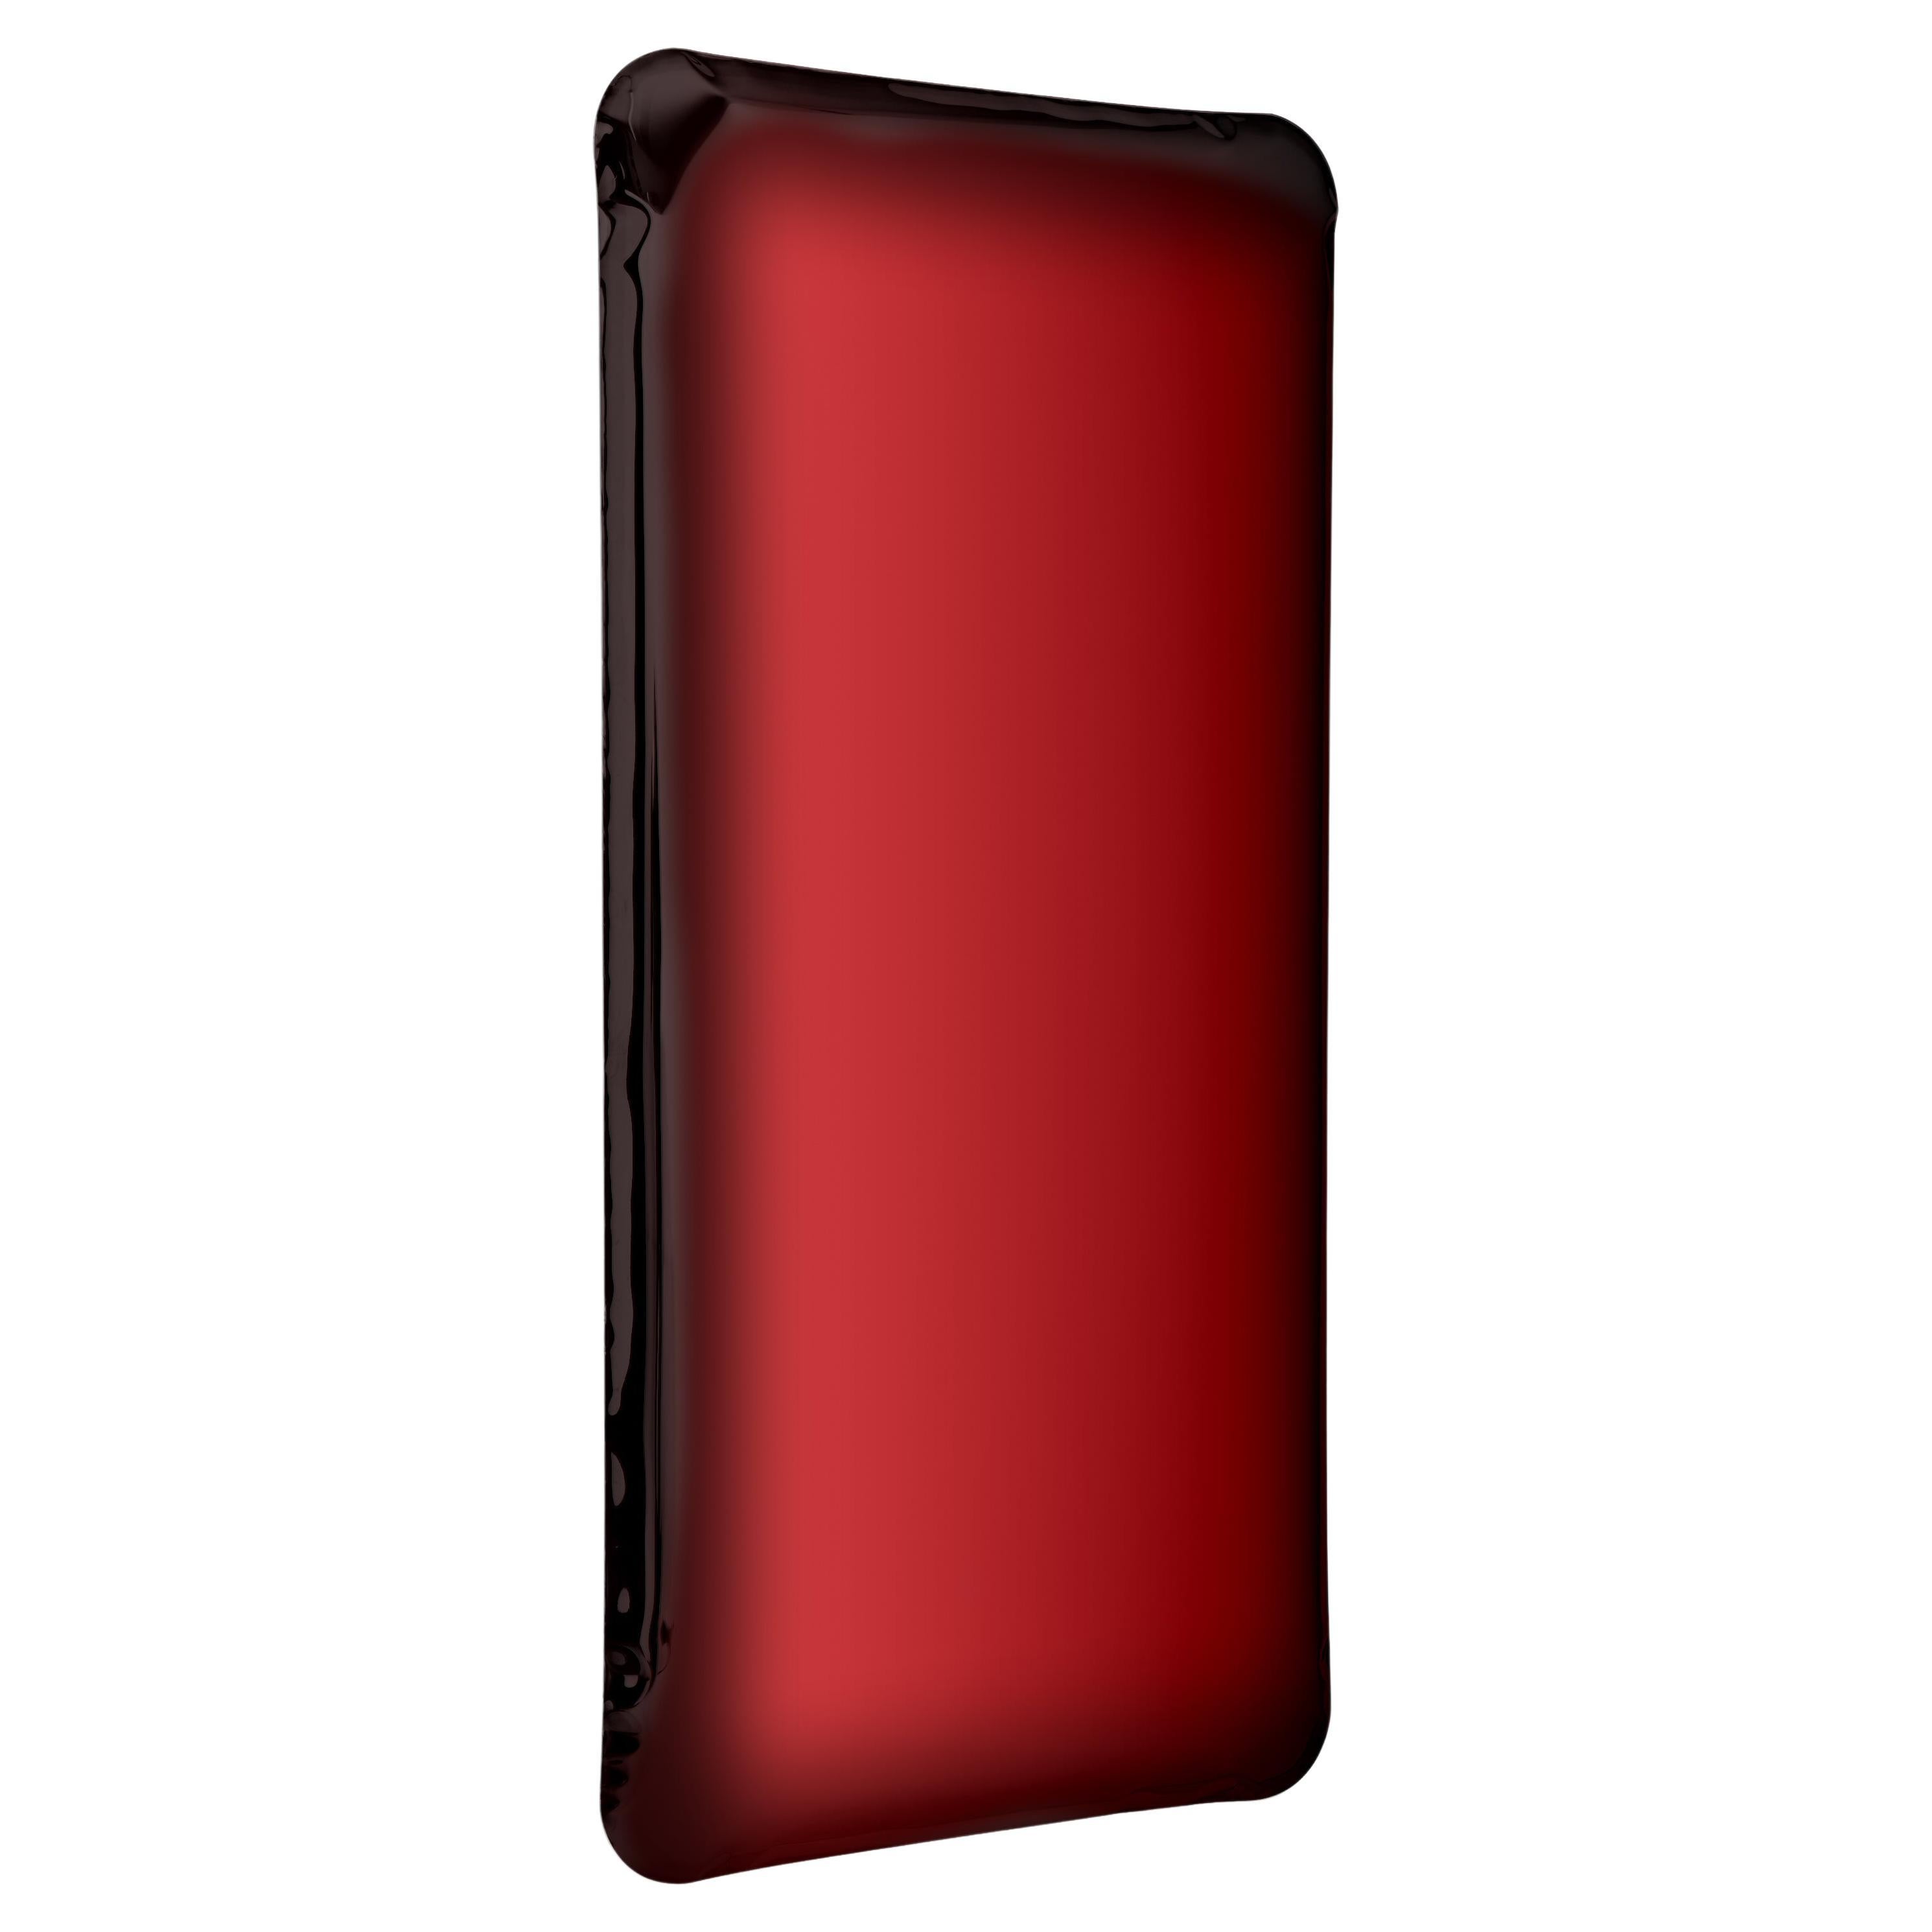 Red Rubin Tafla Q2 Sculptural Wall Mirror by Zieta For Sale